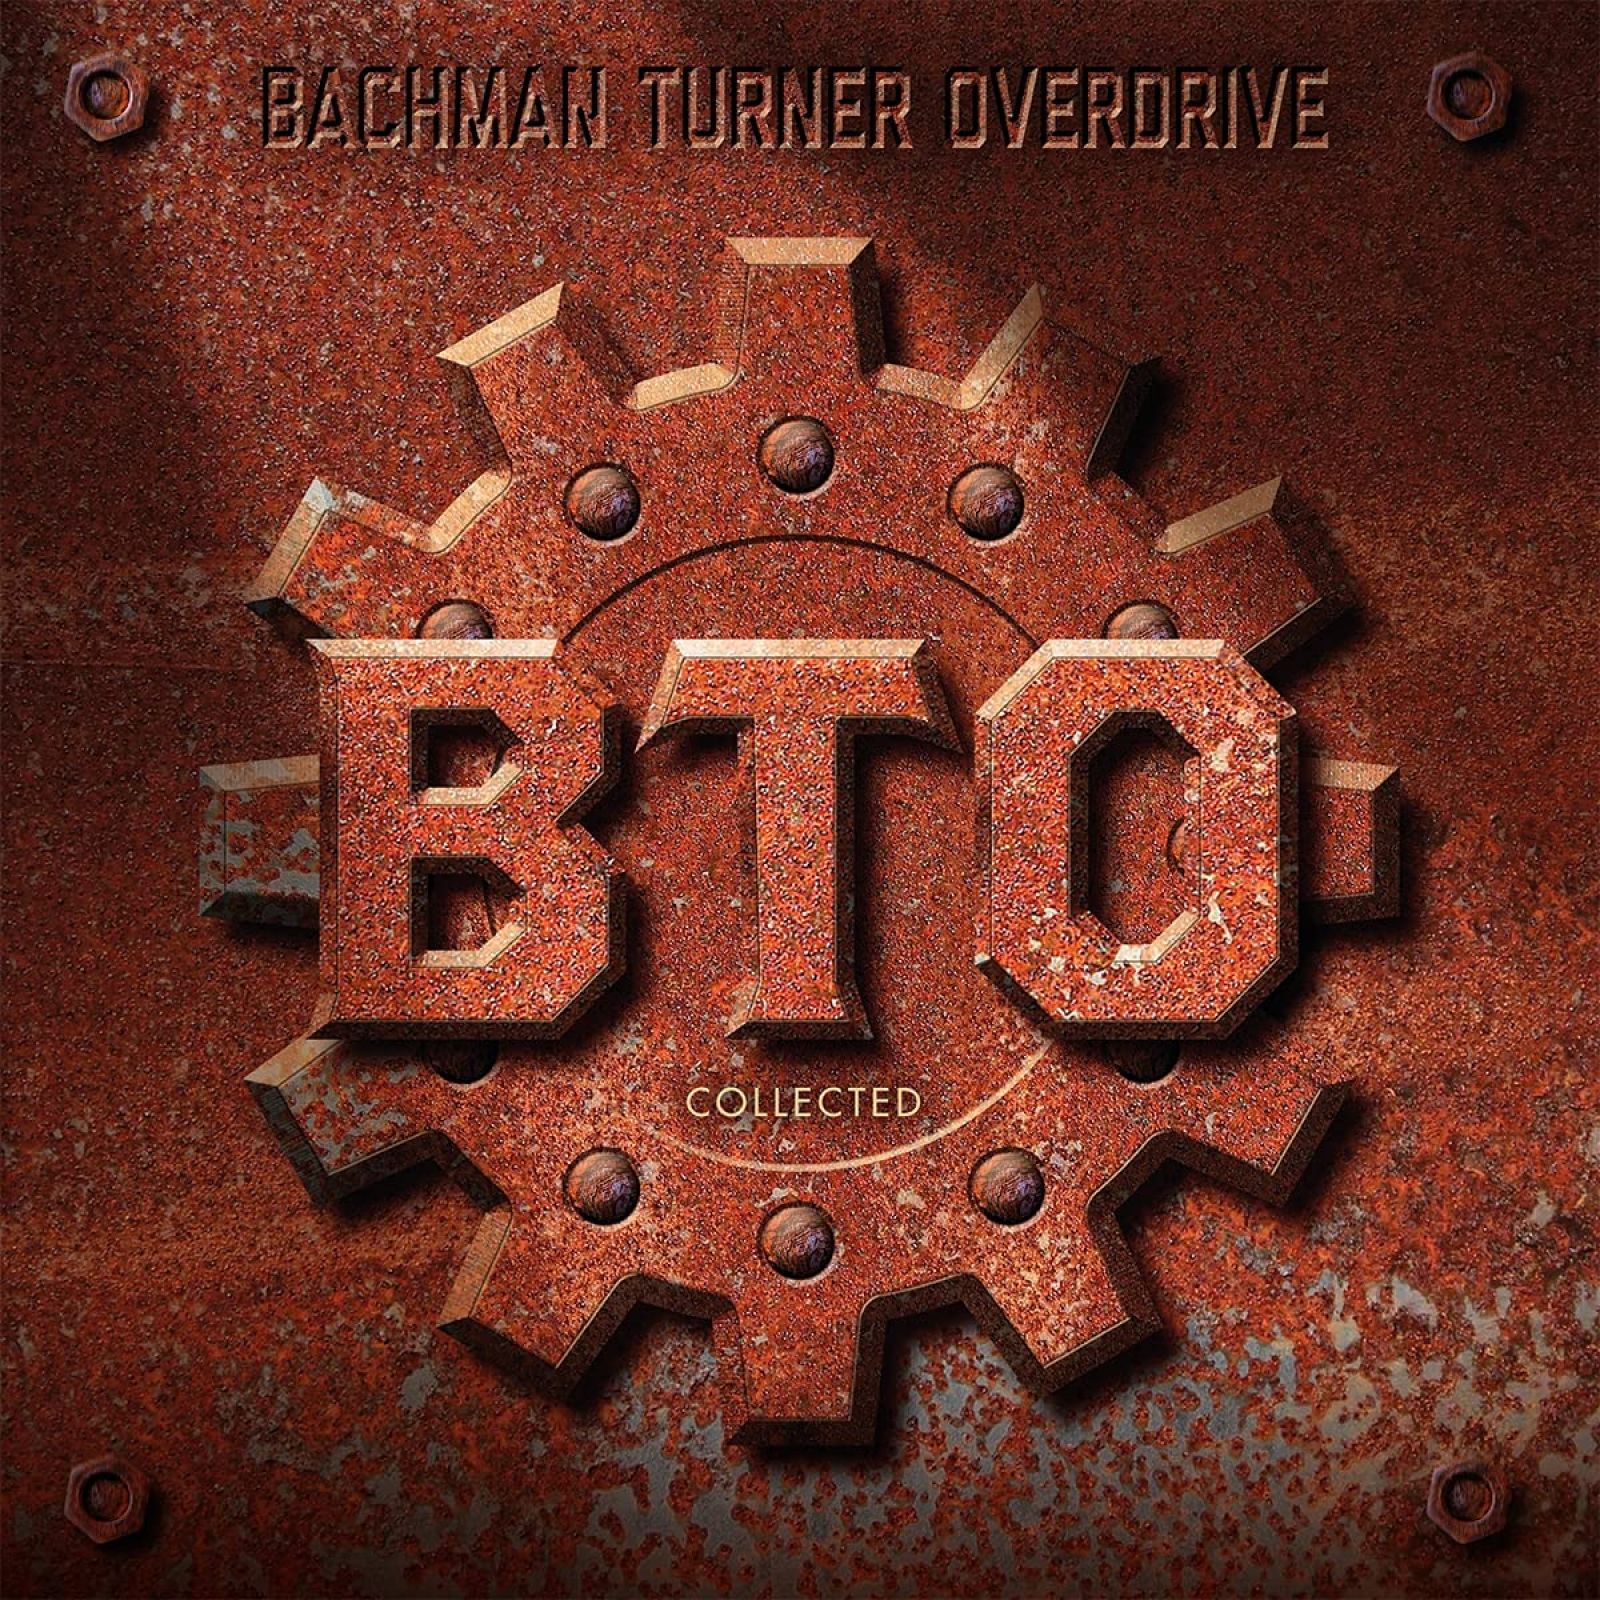 Виниловая пластинка Bachman Turner Overdrive, Collected: Greatest Songs (0600753911327) bachman turner overdrive виниловая пластинка bachman turner overdrive collected